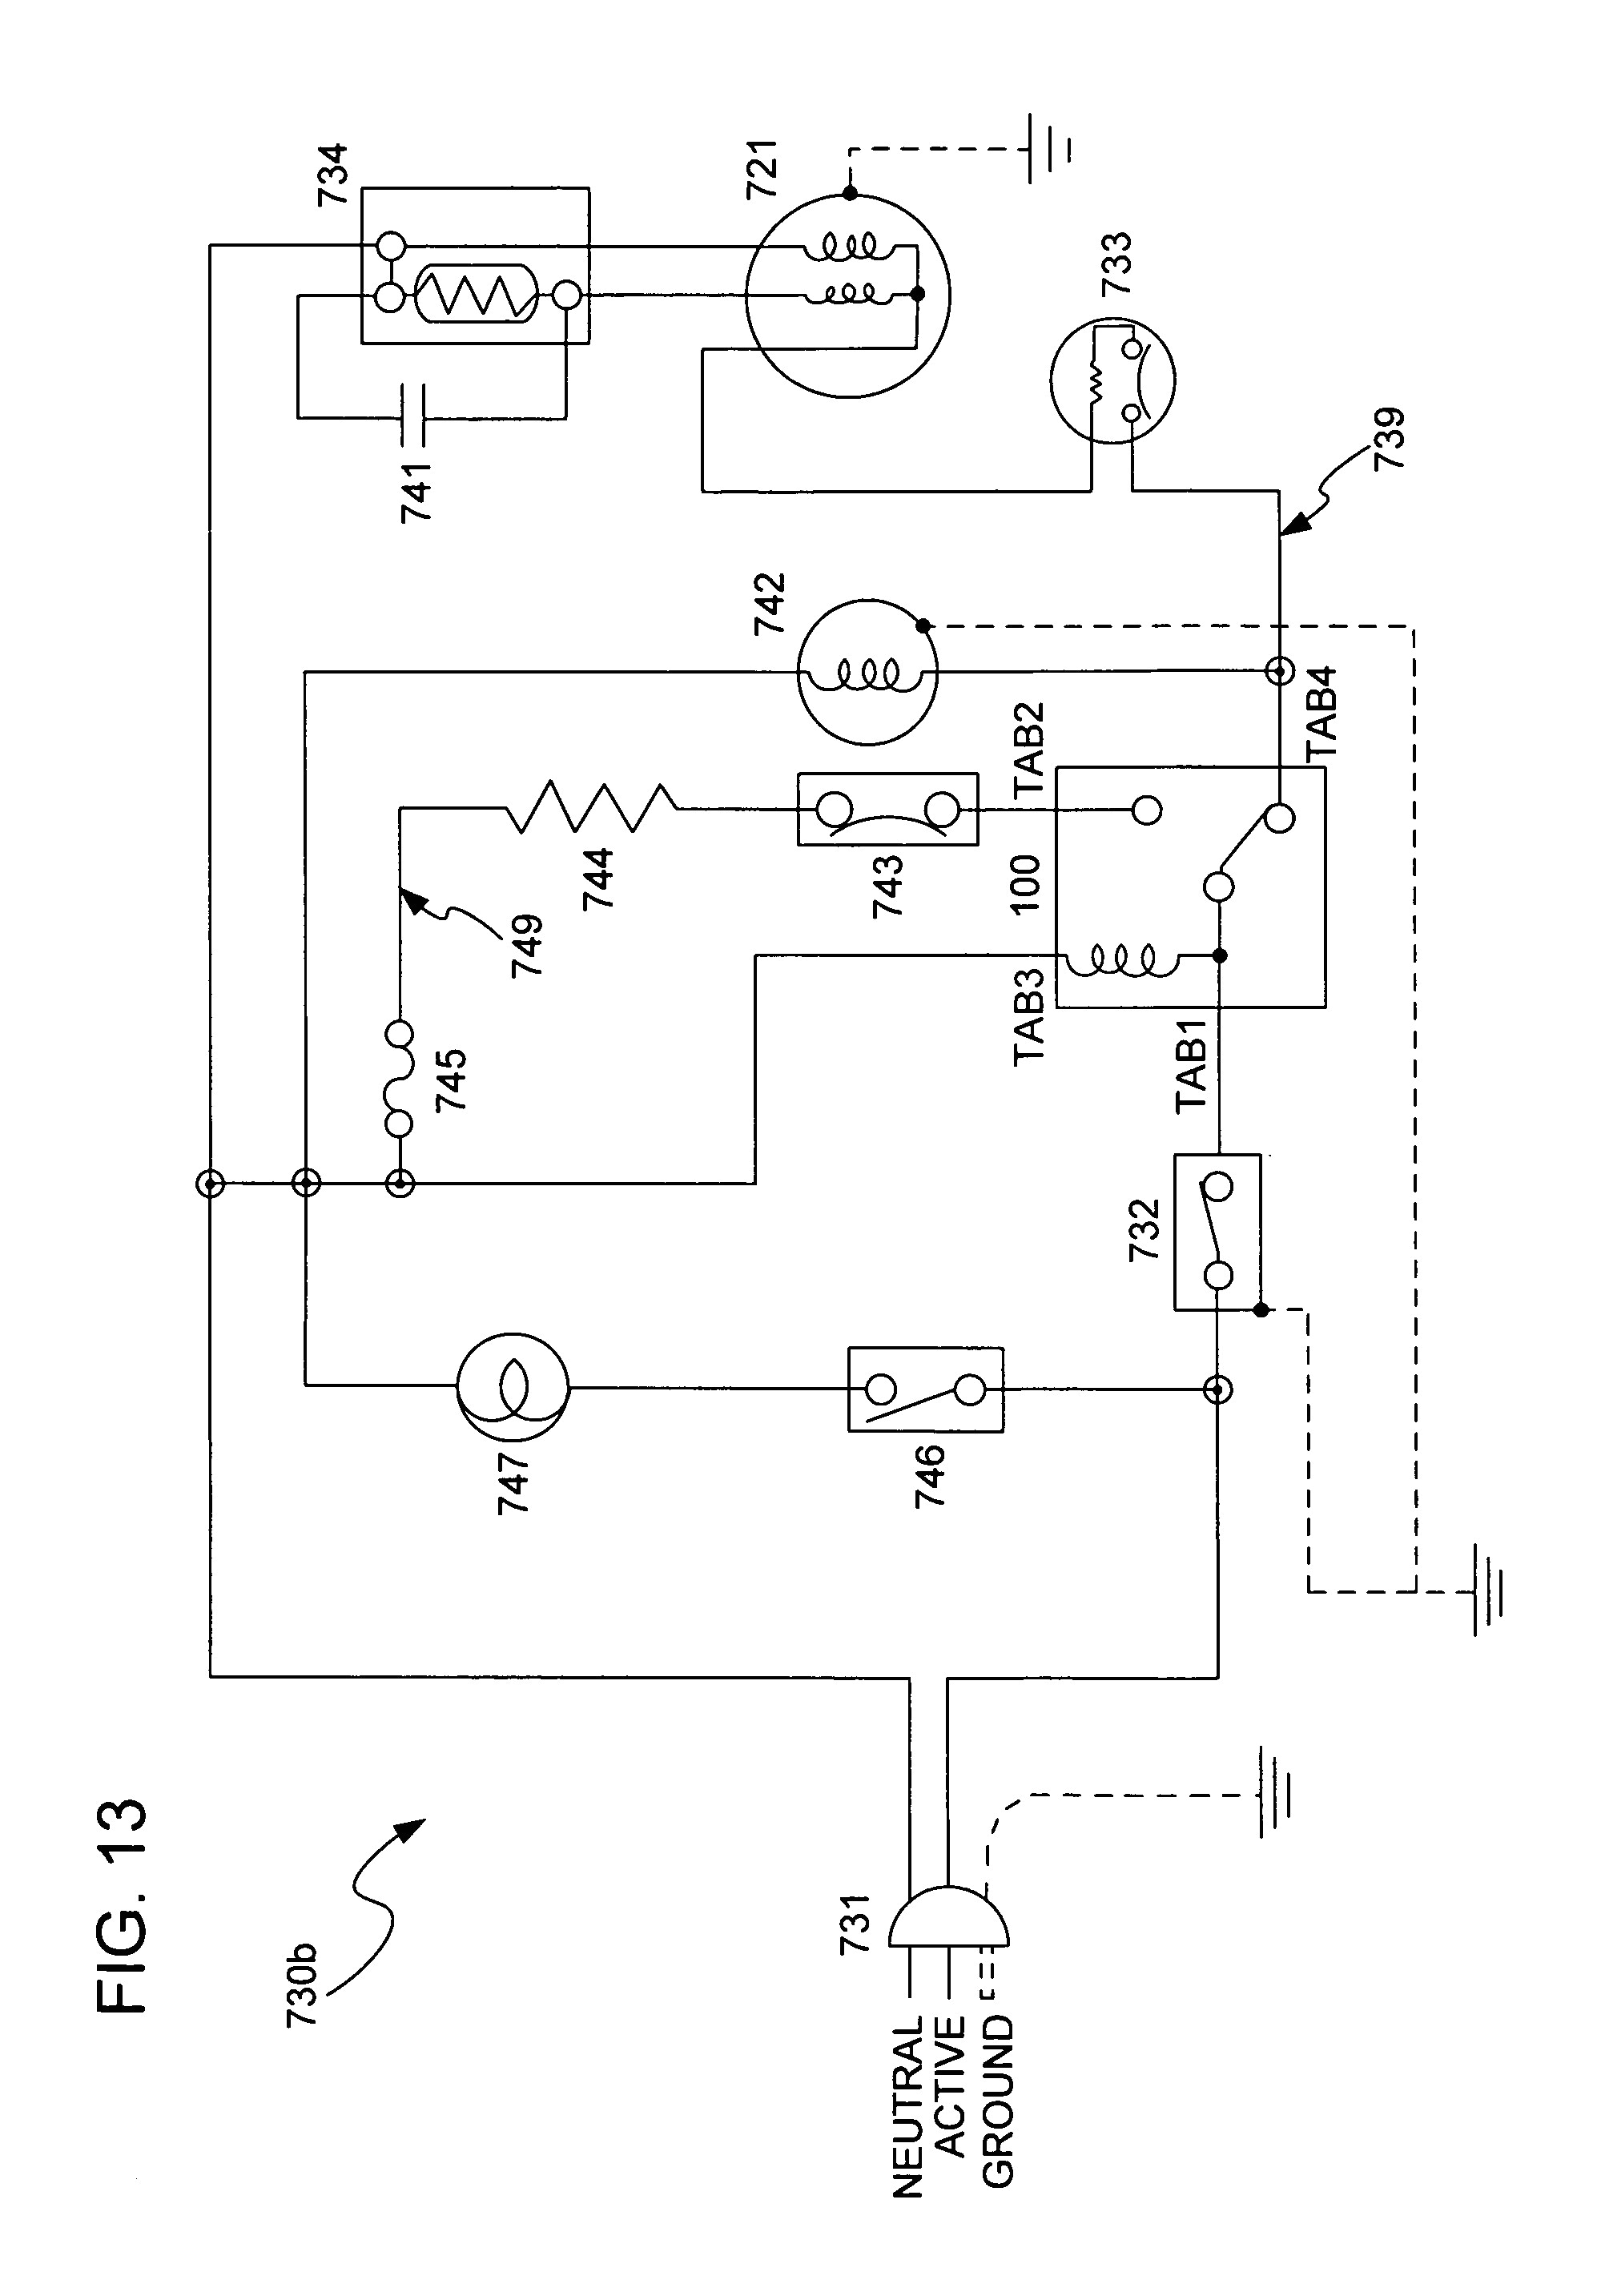 wiring diagram walk in freezer wiring diagram insidewiring diagram freezer box wiring diagram forward russell walk